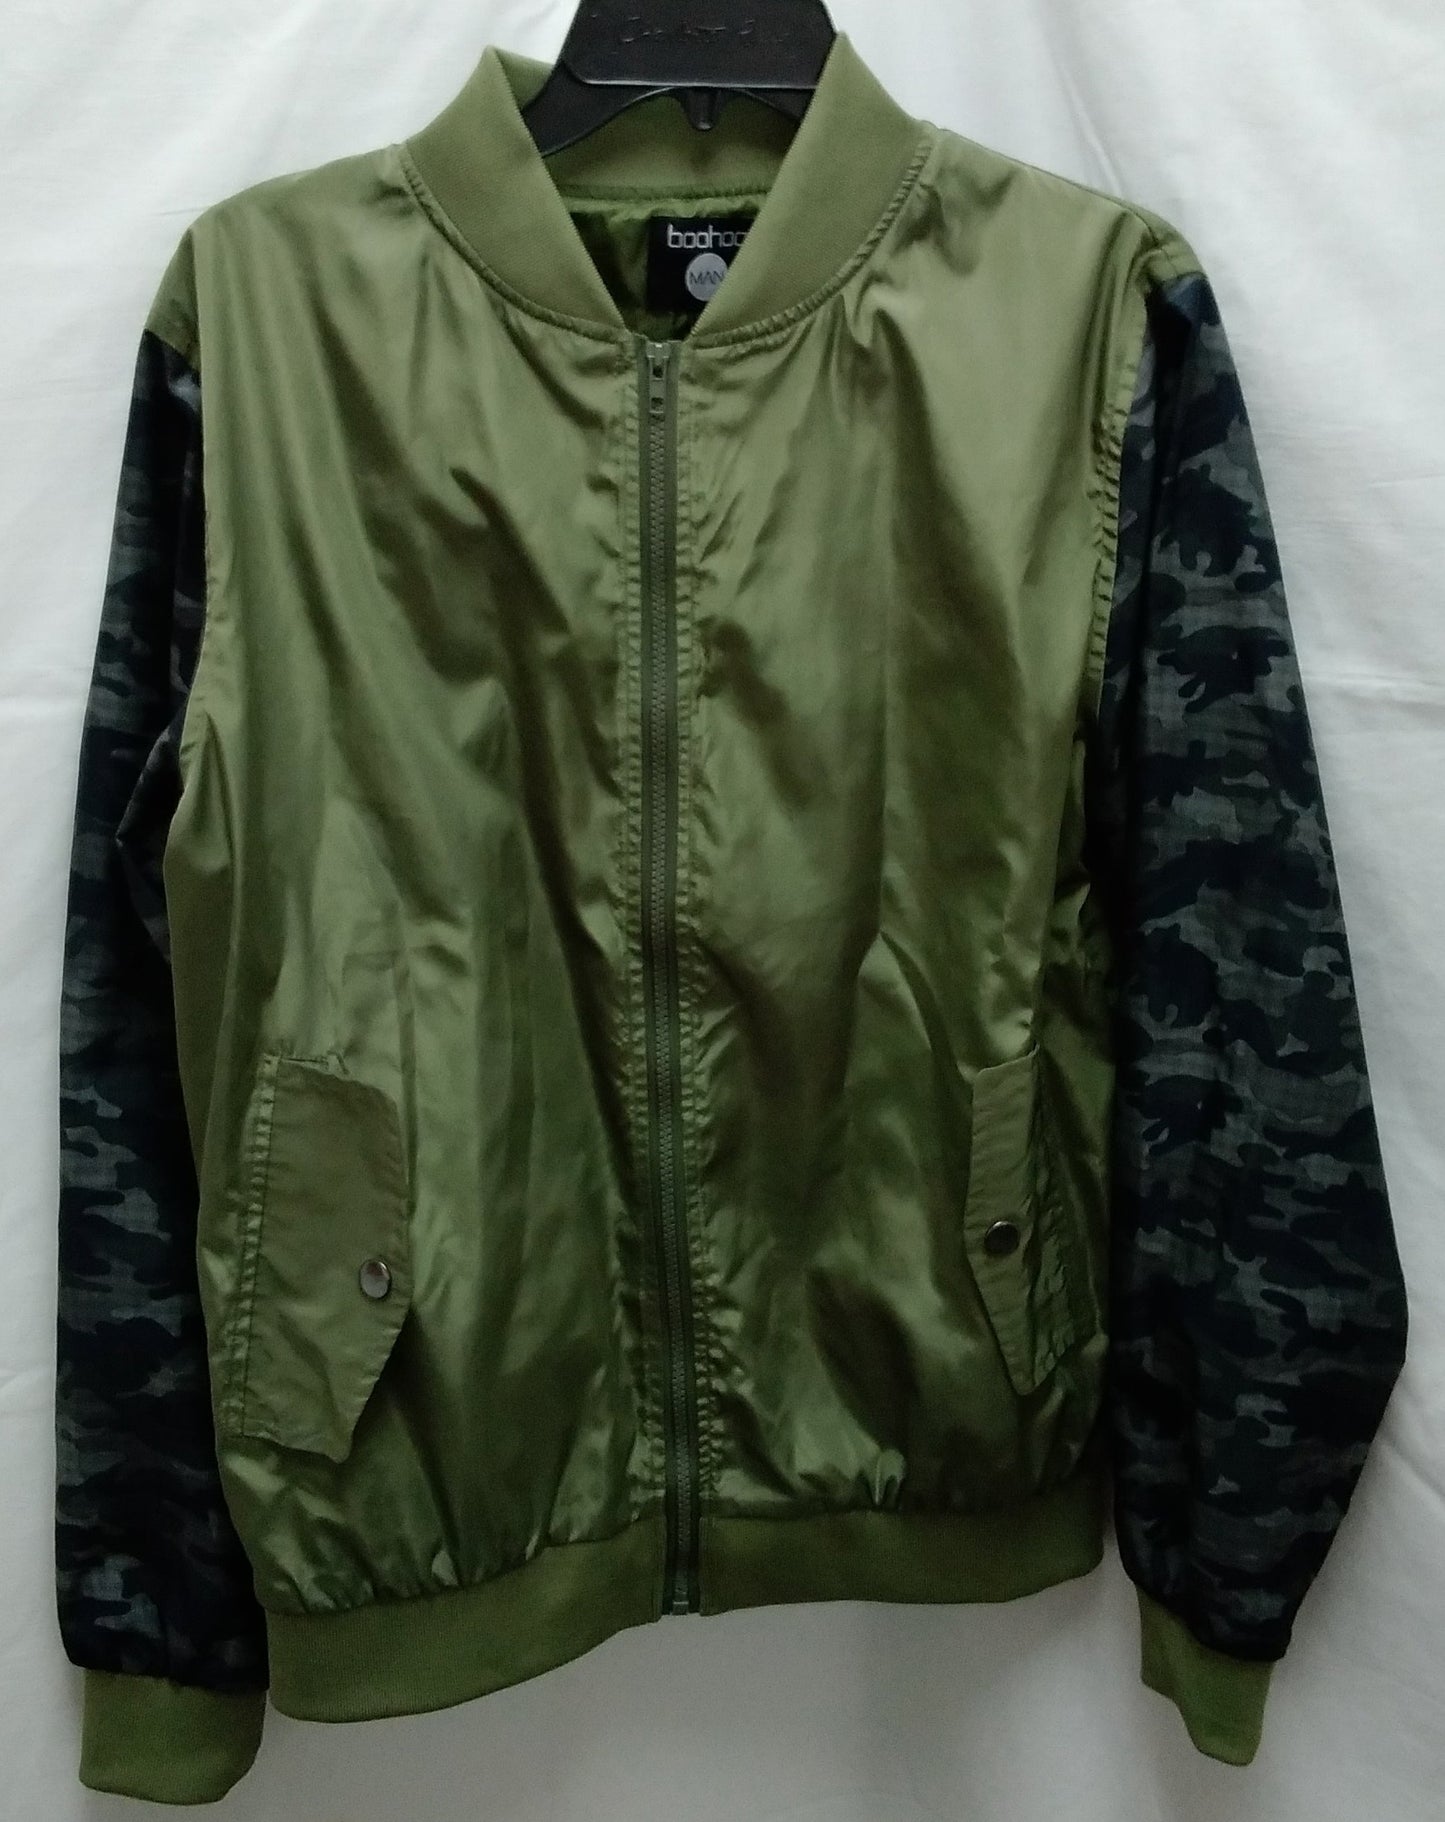 NWNT -- Boohoo Men's Camo Sleeve Green Bomber Jacket -- Size L